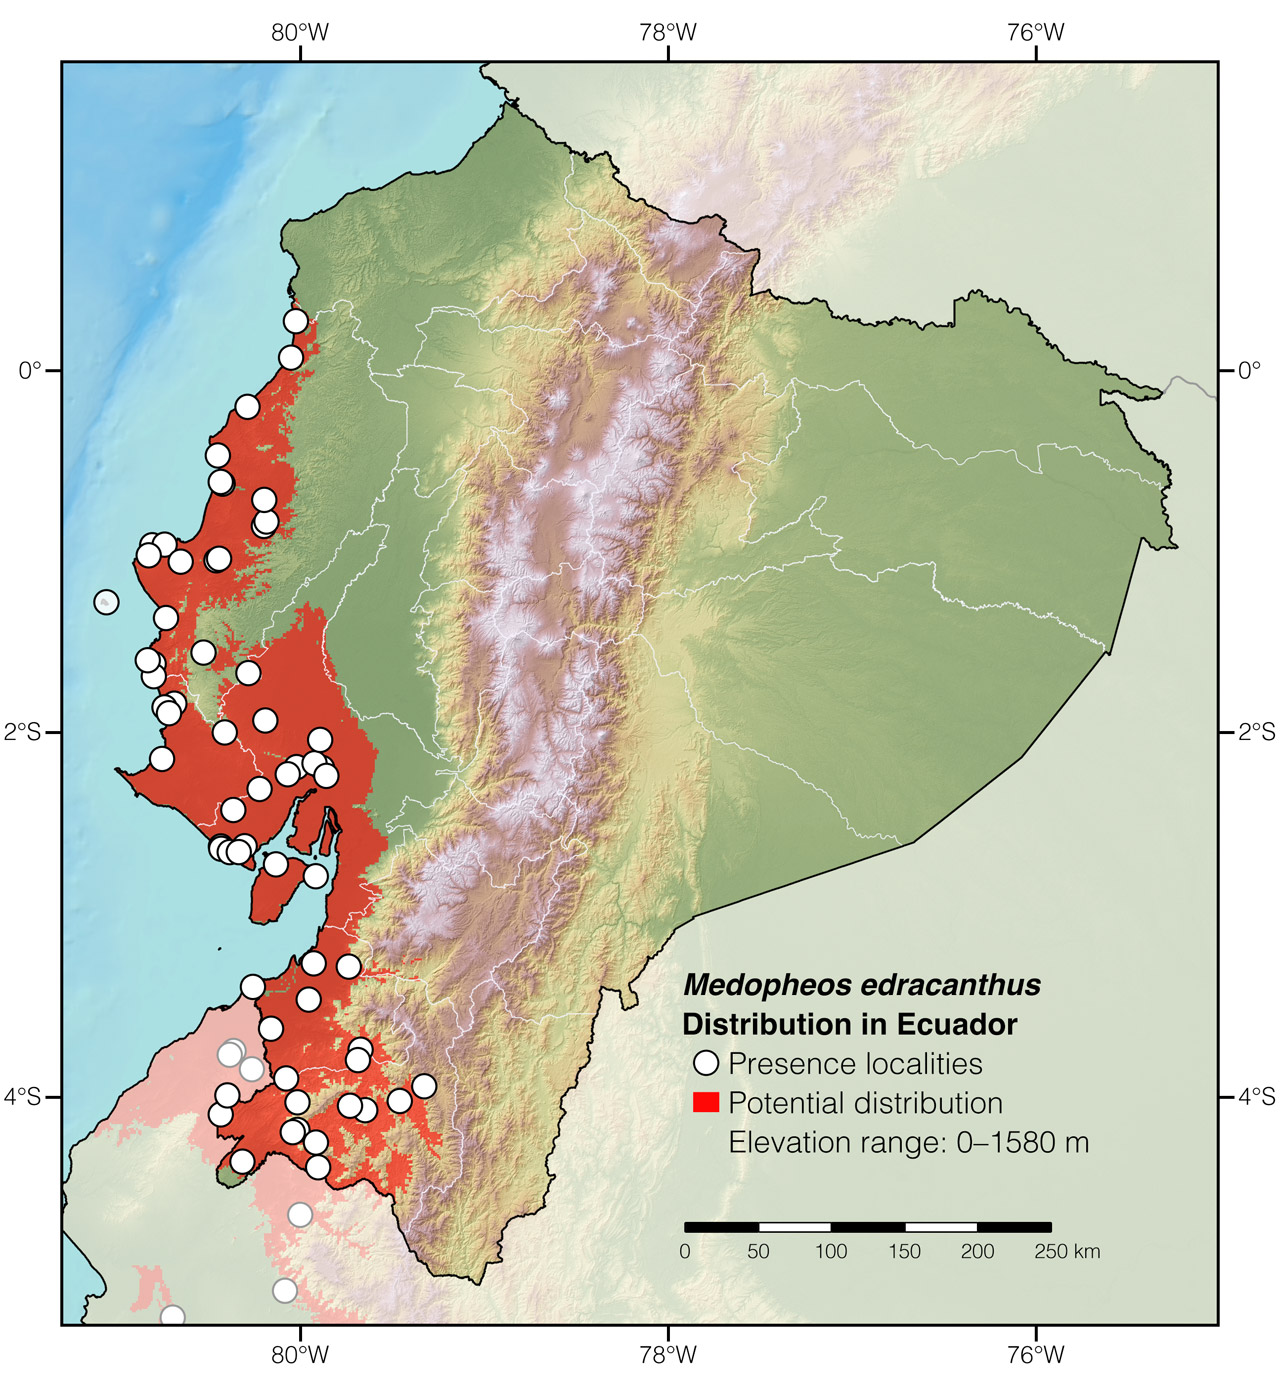 Distribution of Medopheos edracanthus in Ecuador